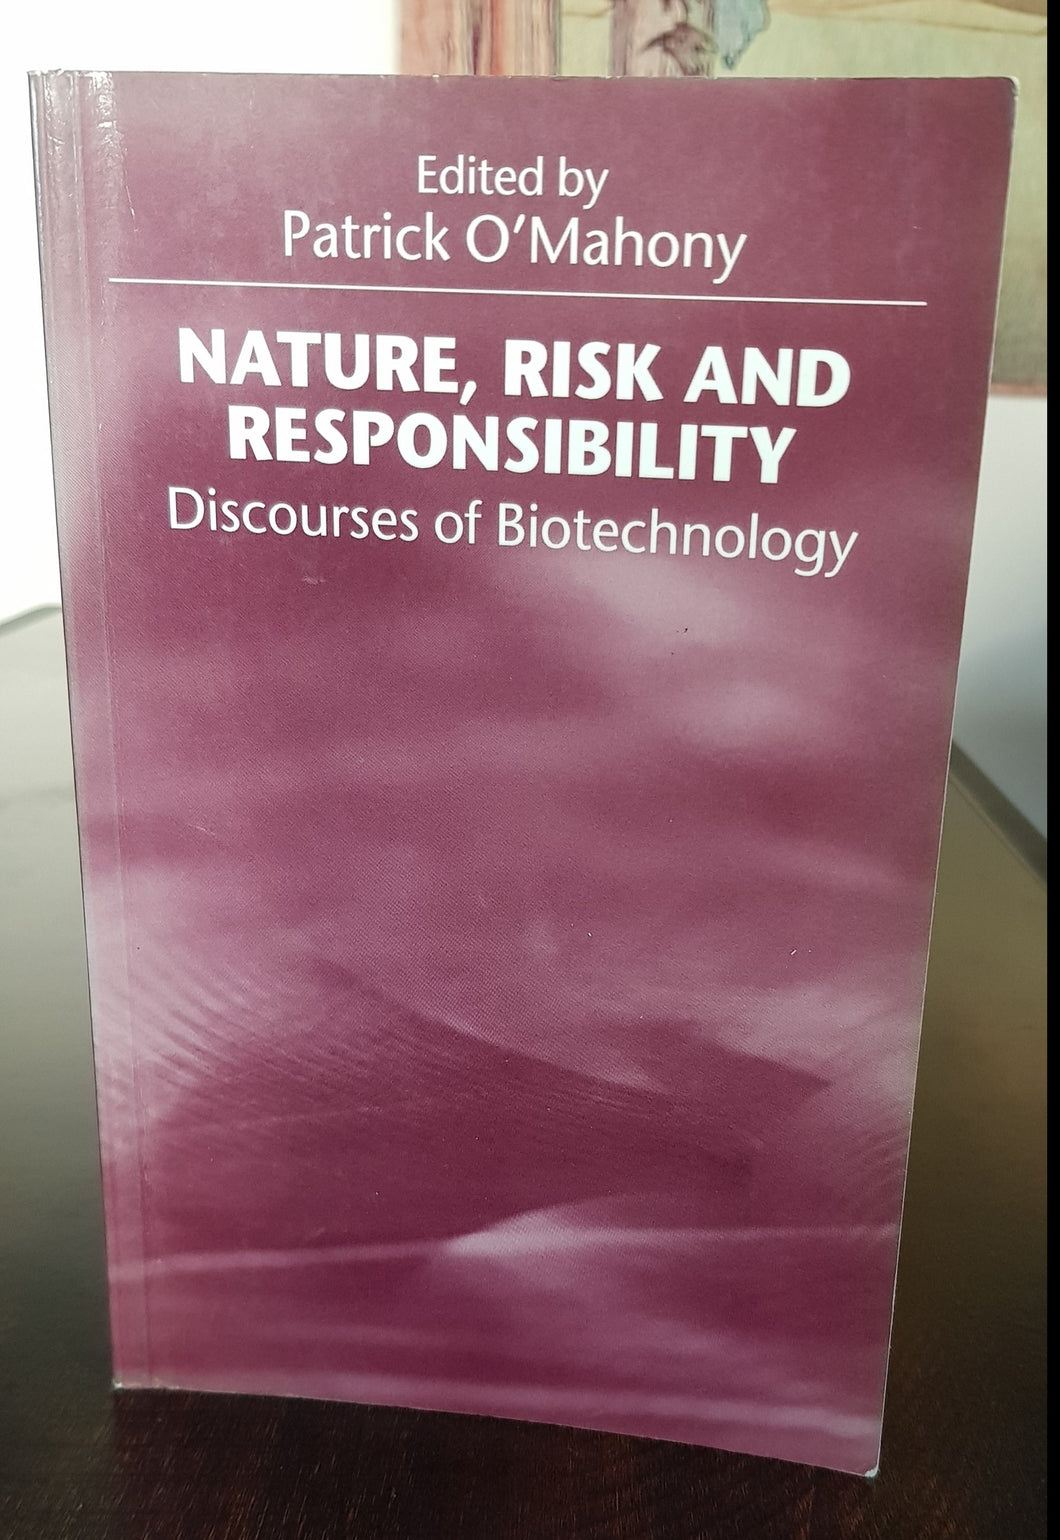 Nature, Risk and Responsibility by Patrick O'Mahony (Editor)